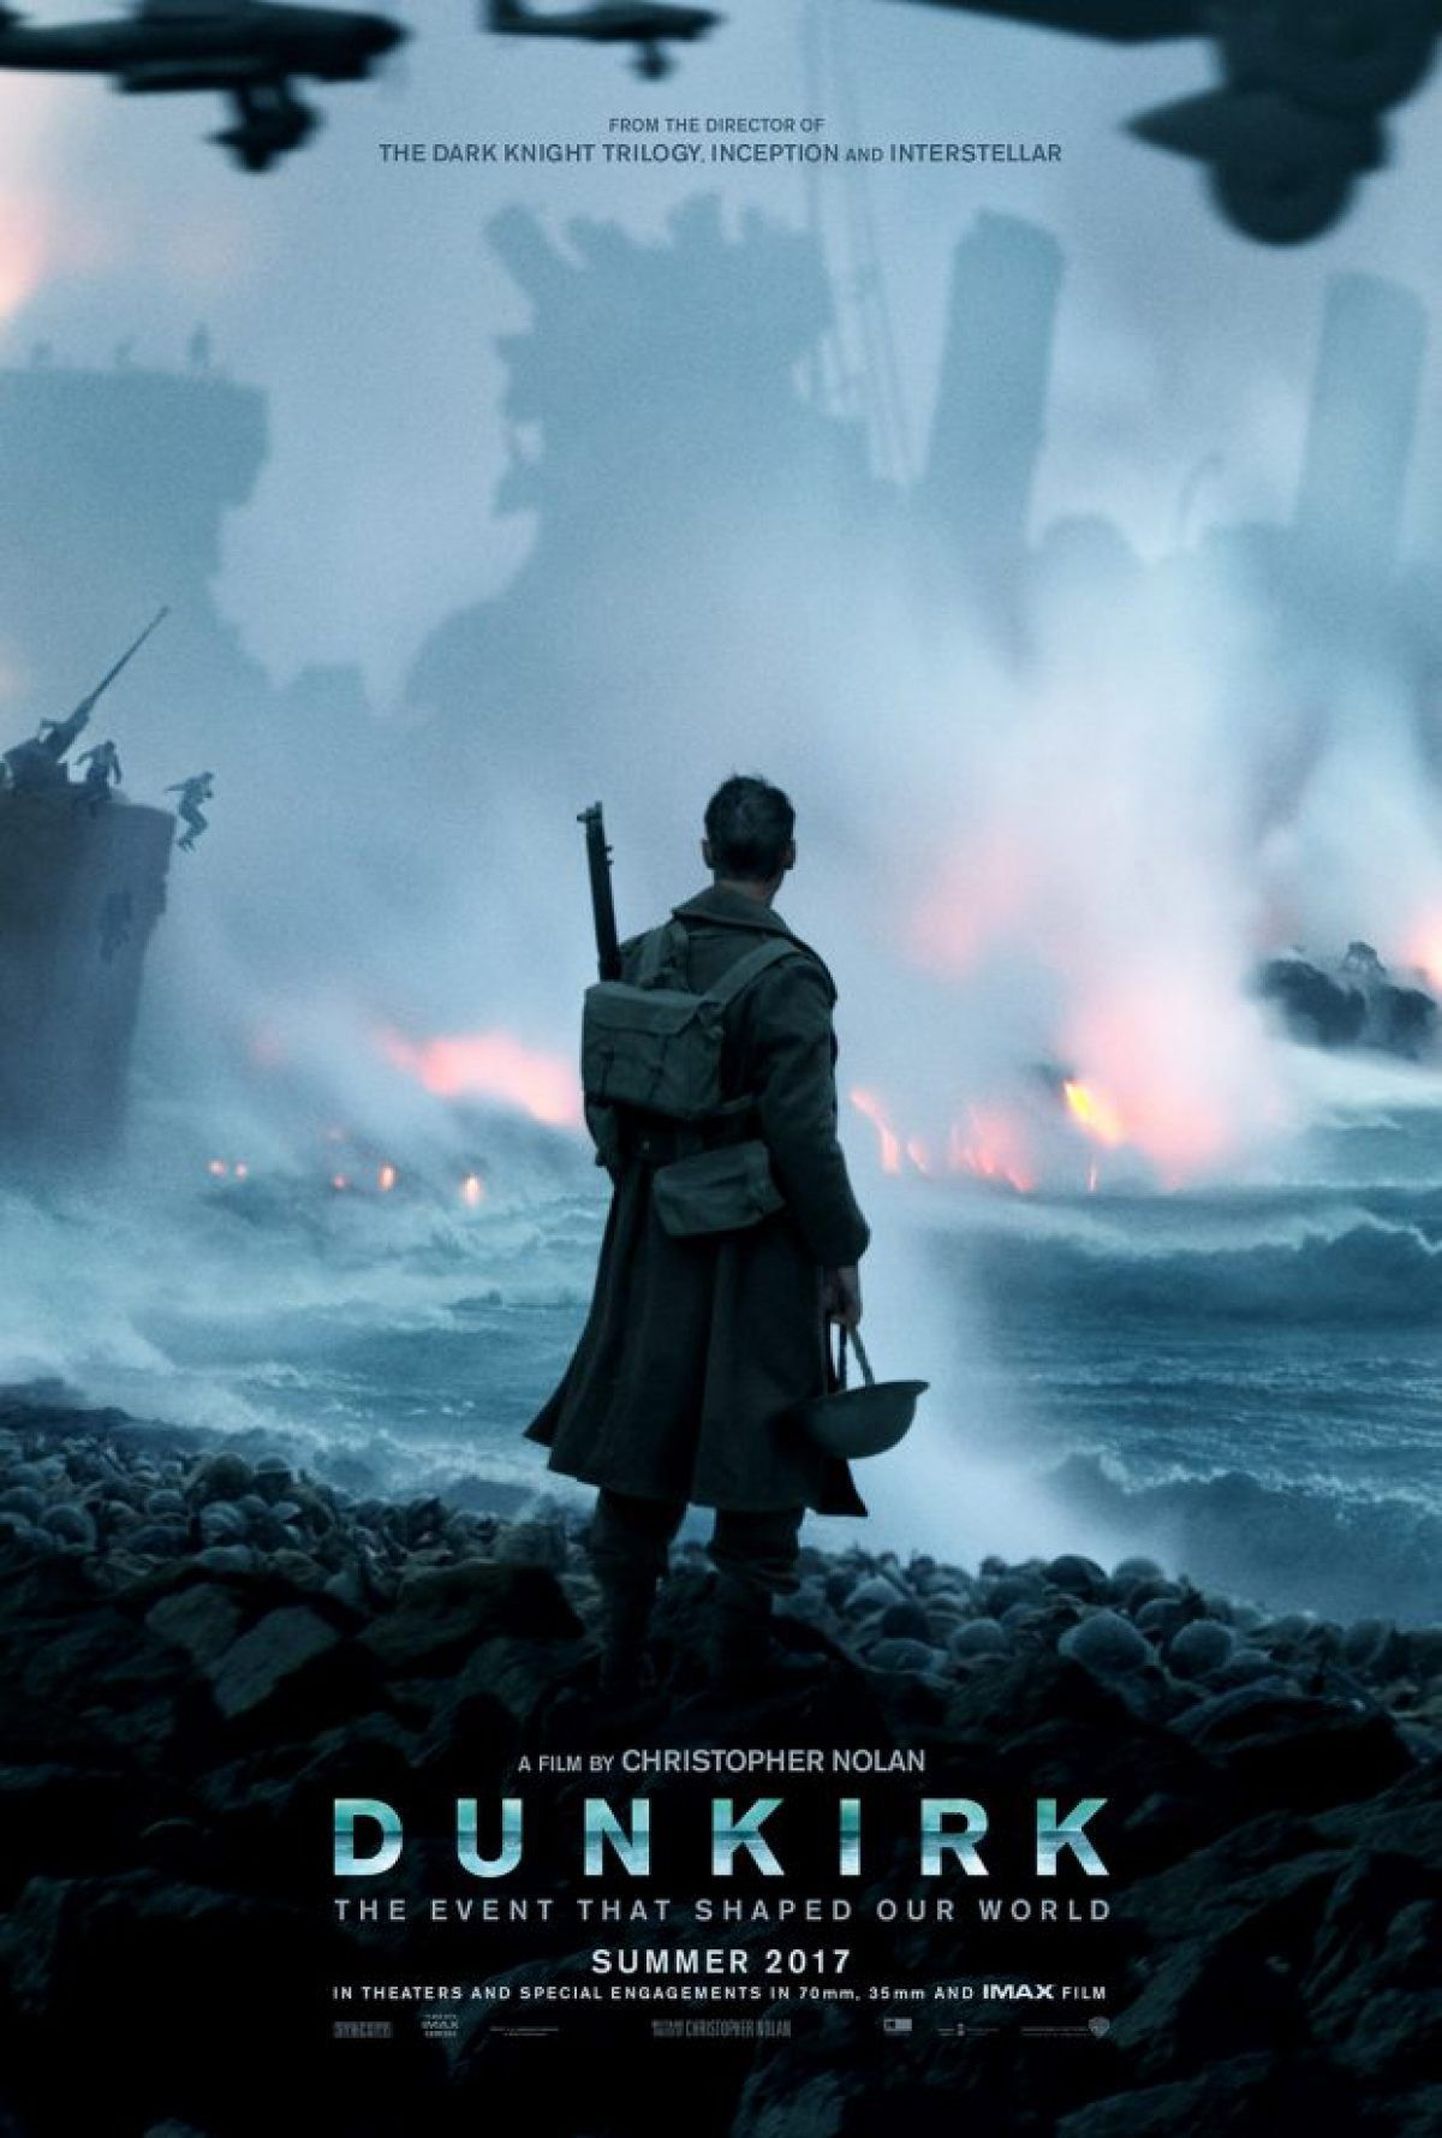 “Dunkirk”.